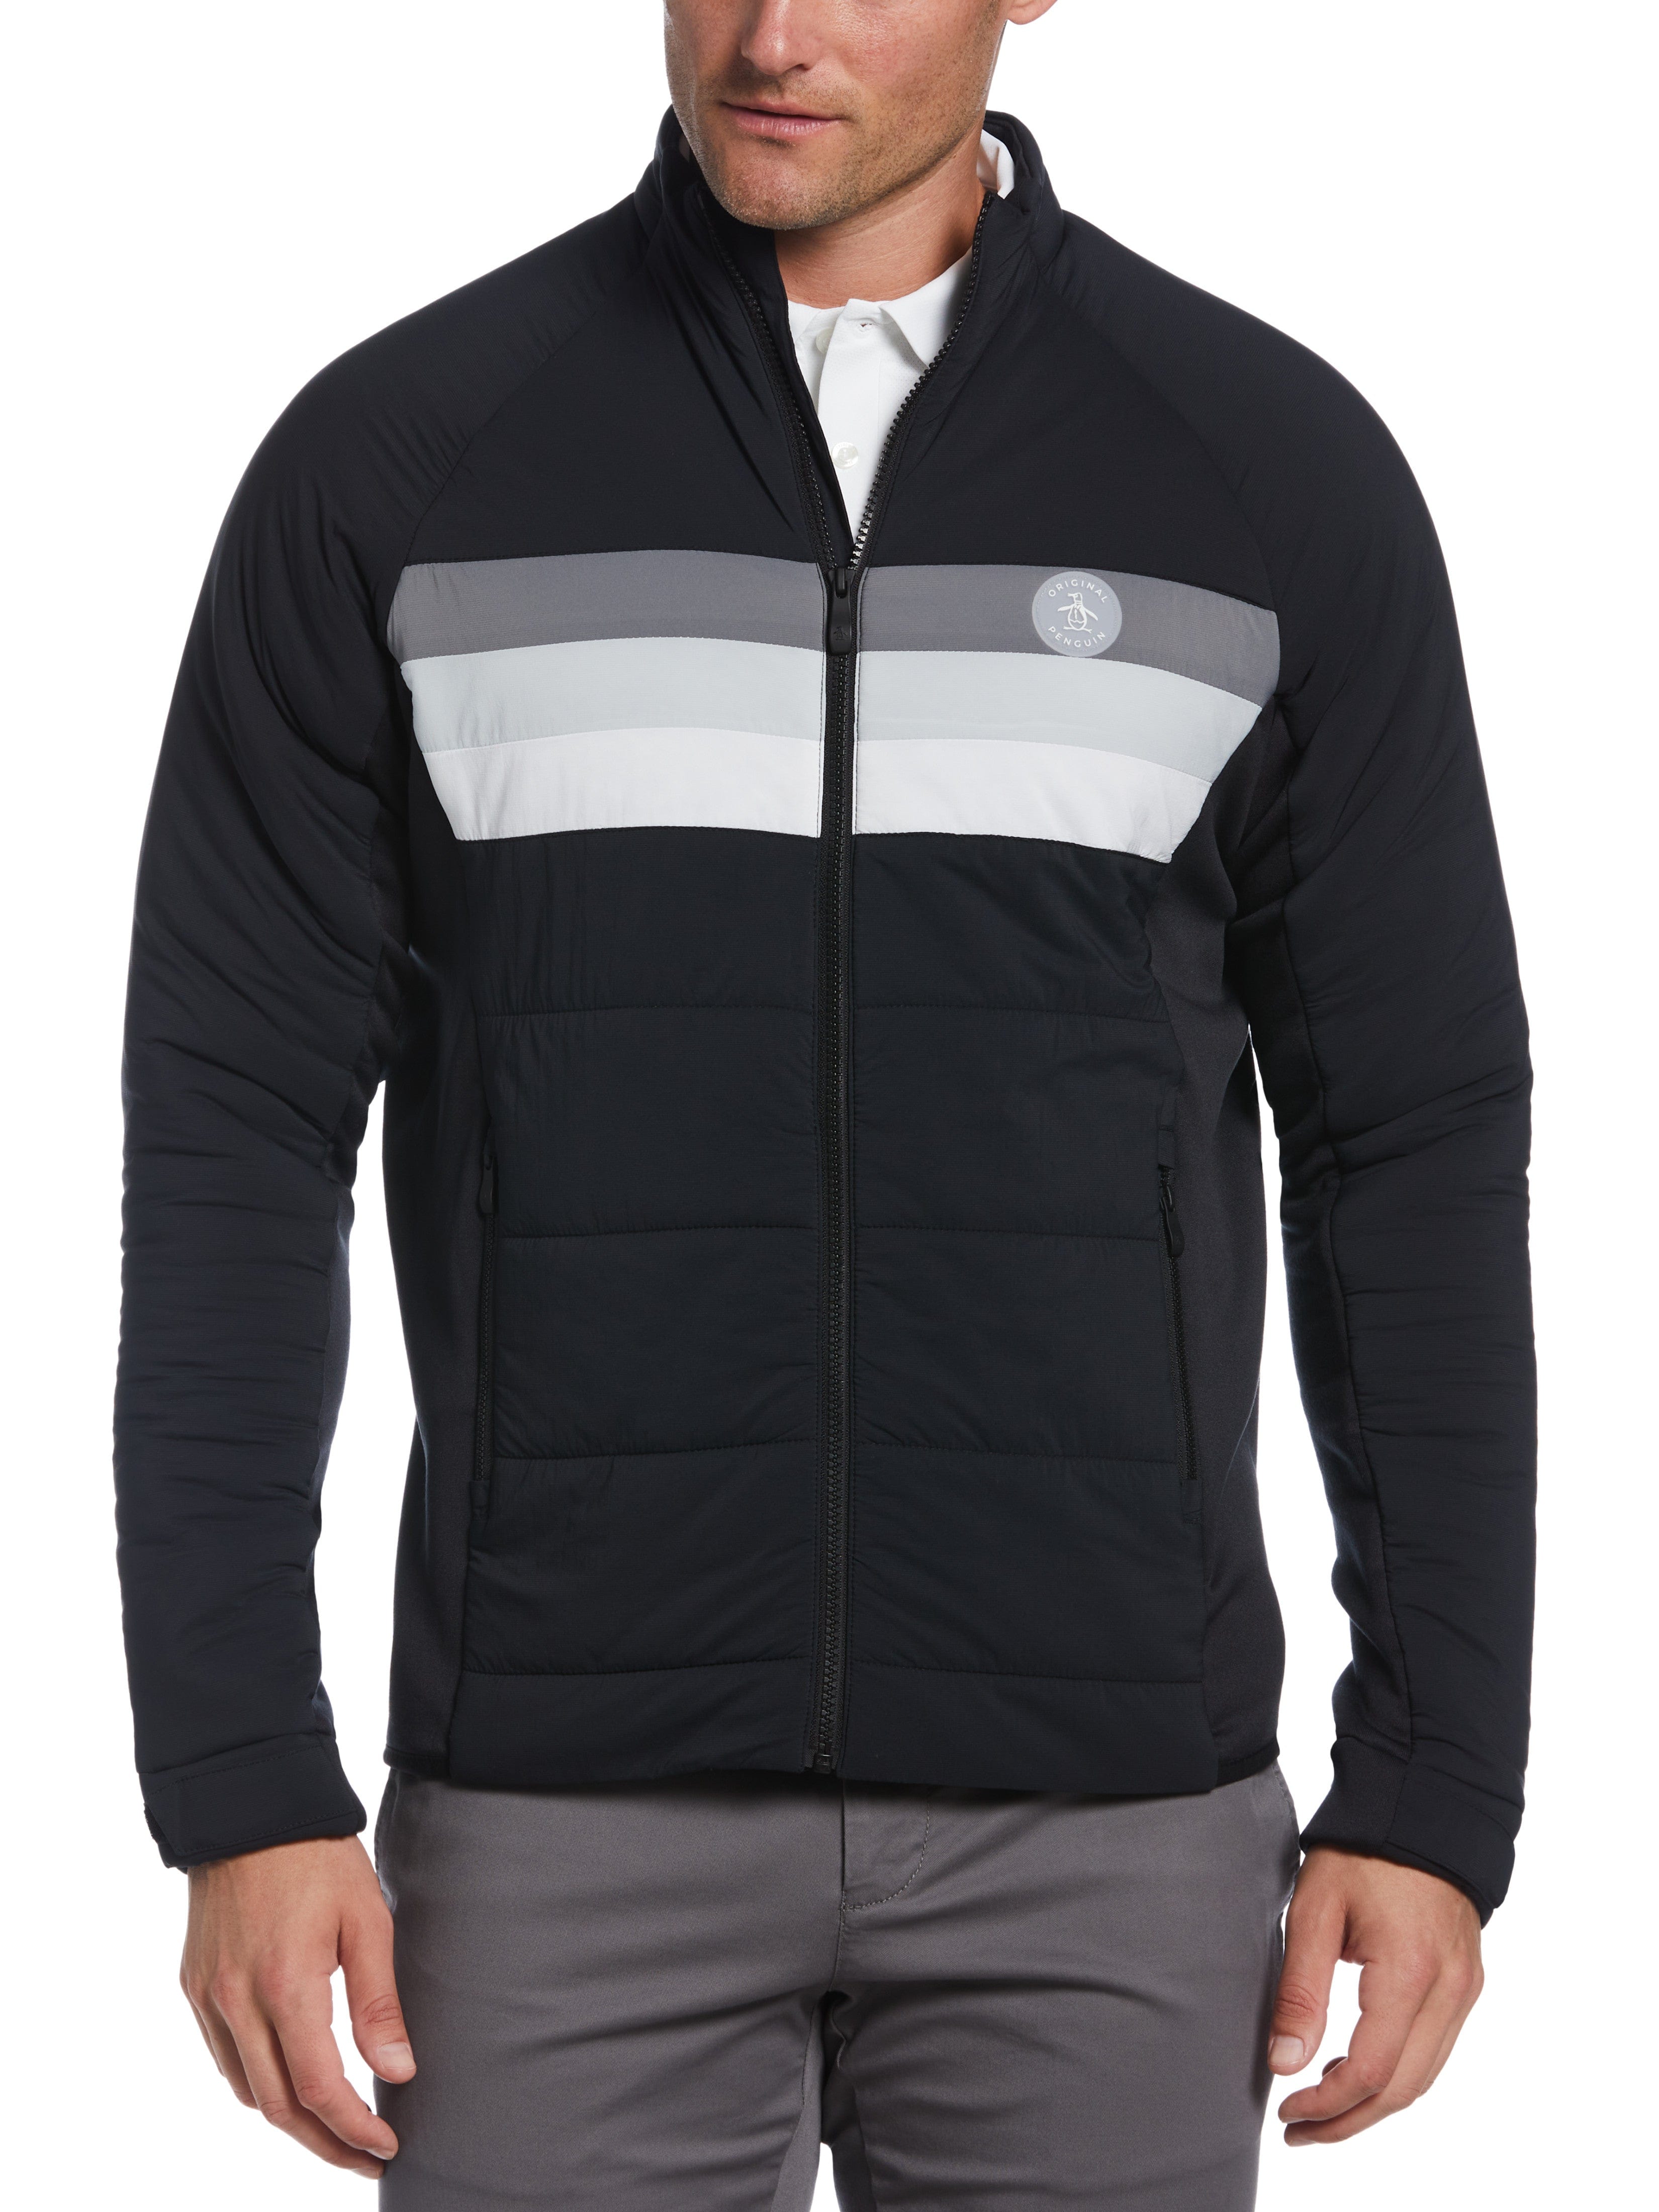 Original Penguin Mens Insulated 70s Golf Jacket Top, Size Large, Black, 100% Nylon | Golf Apparel Shop